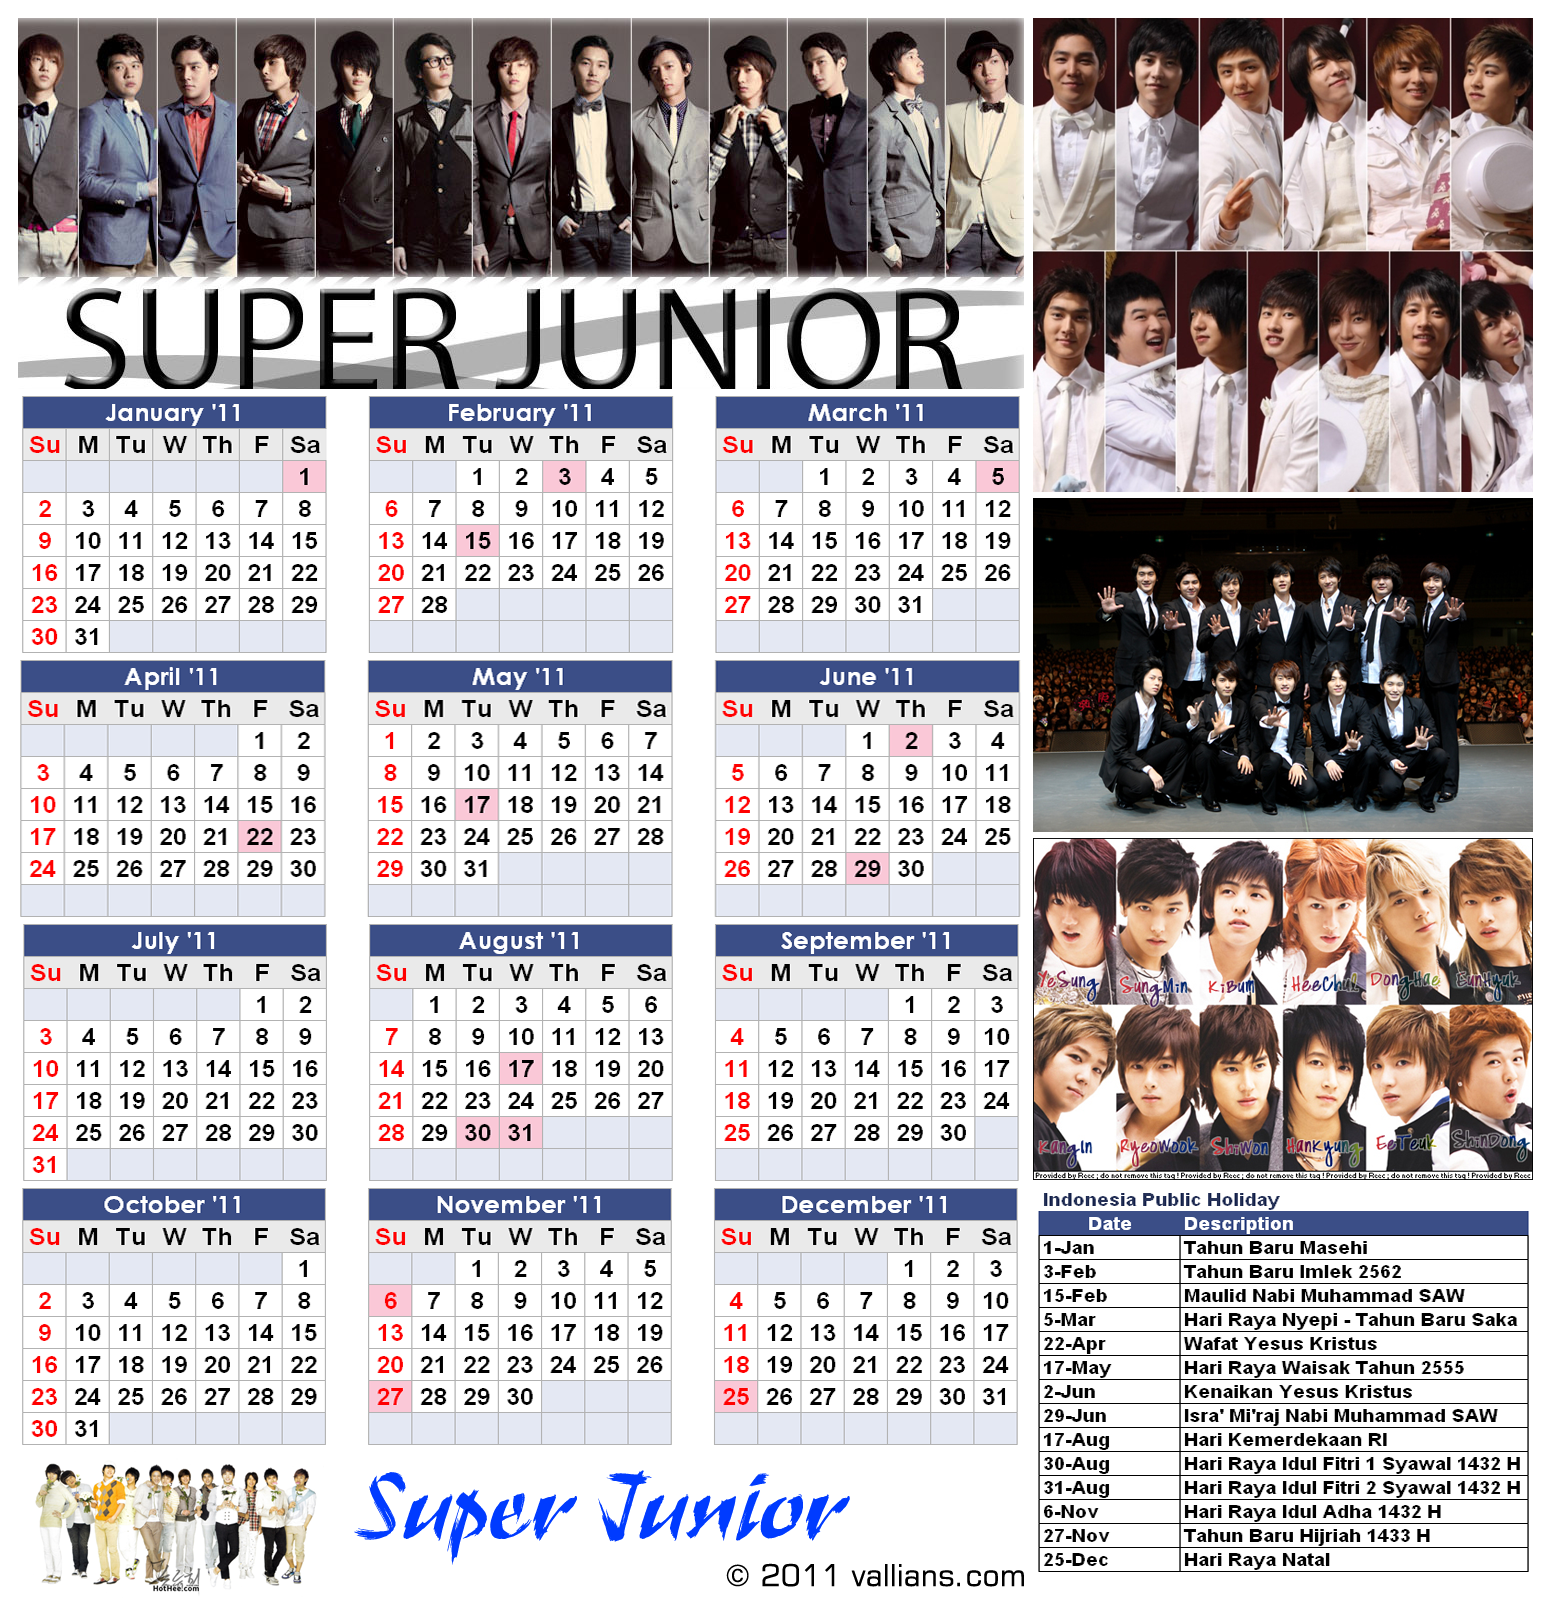 http://2.bp.blogspot.com/-5V1FXlGkEHo/TVzDRIOJmYI/AAAAAAAAAEA/cxeLPmf42V8/s1600/Super-Junior-Calendar-2011.png